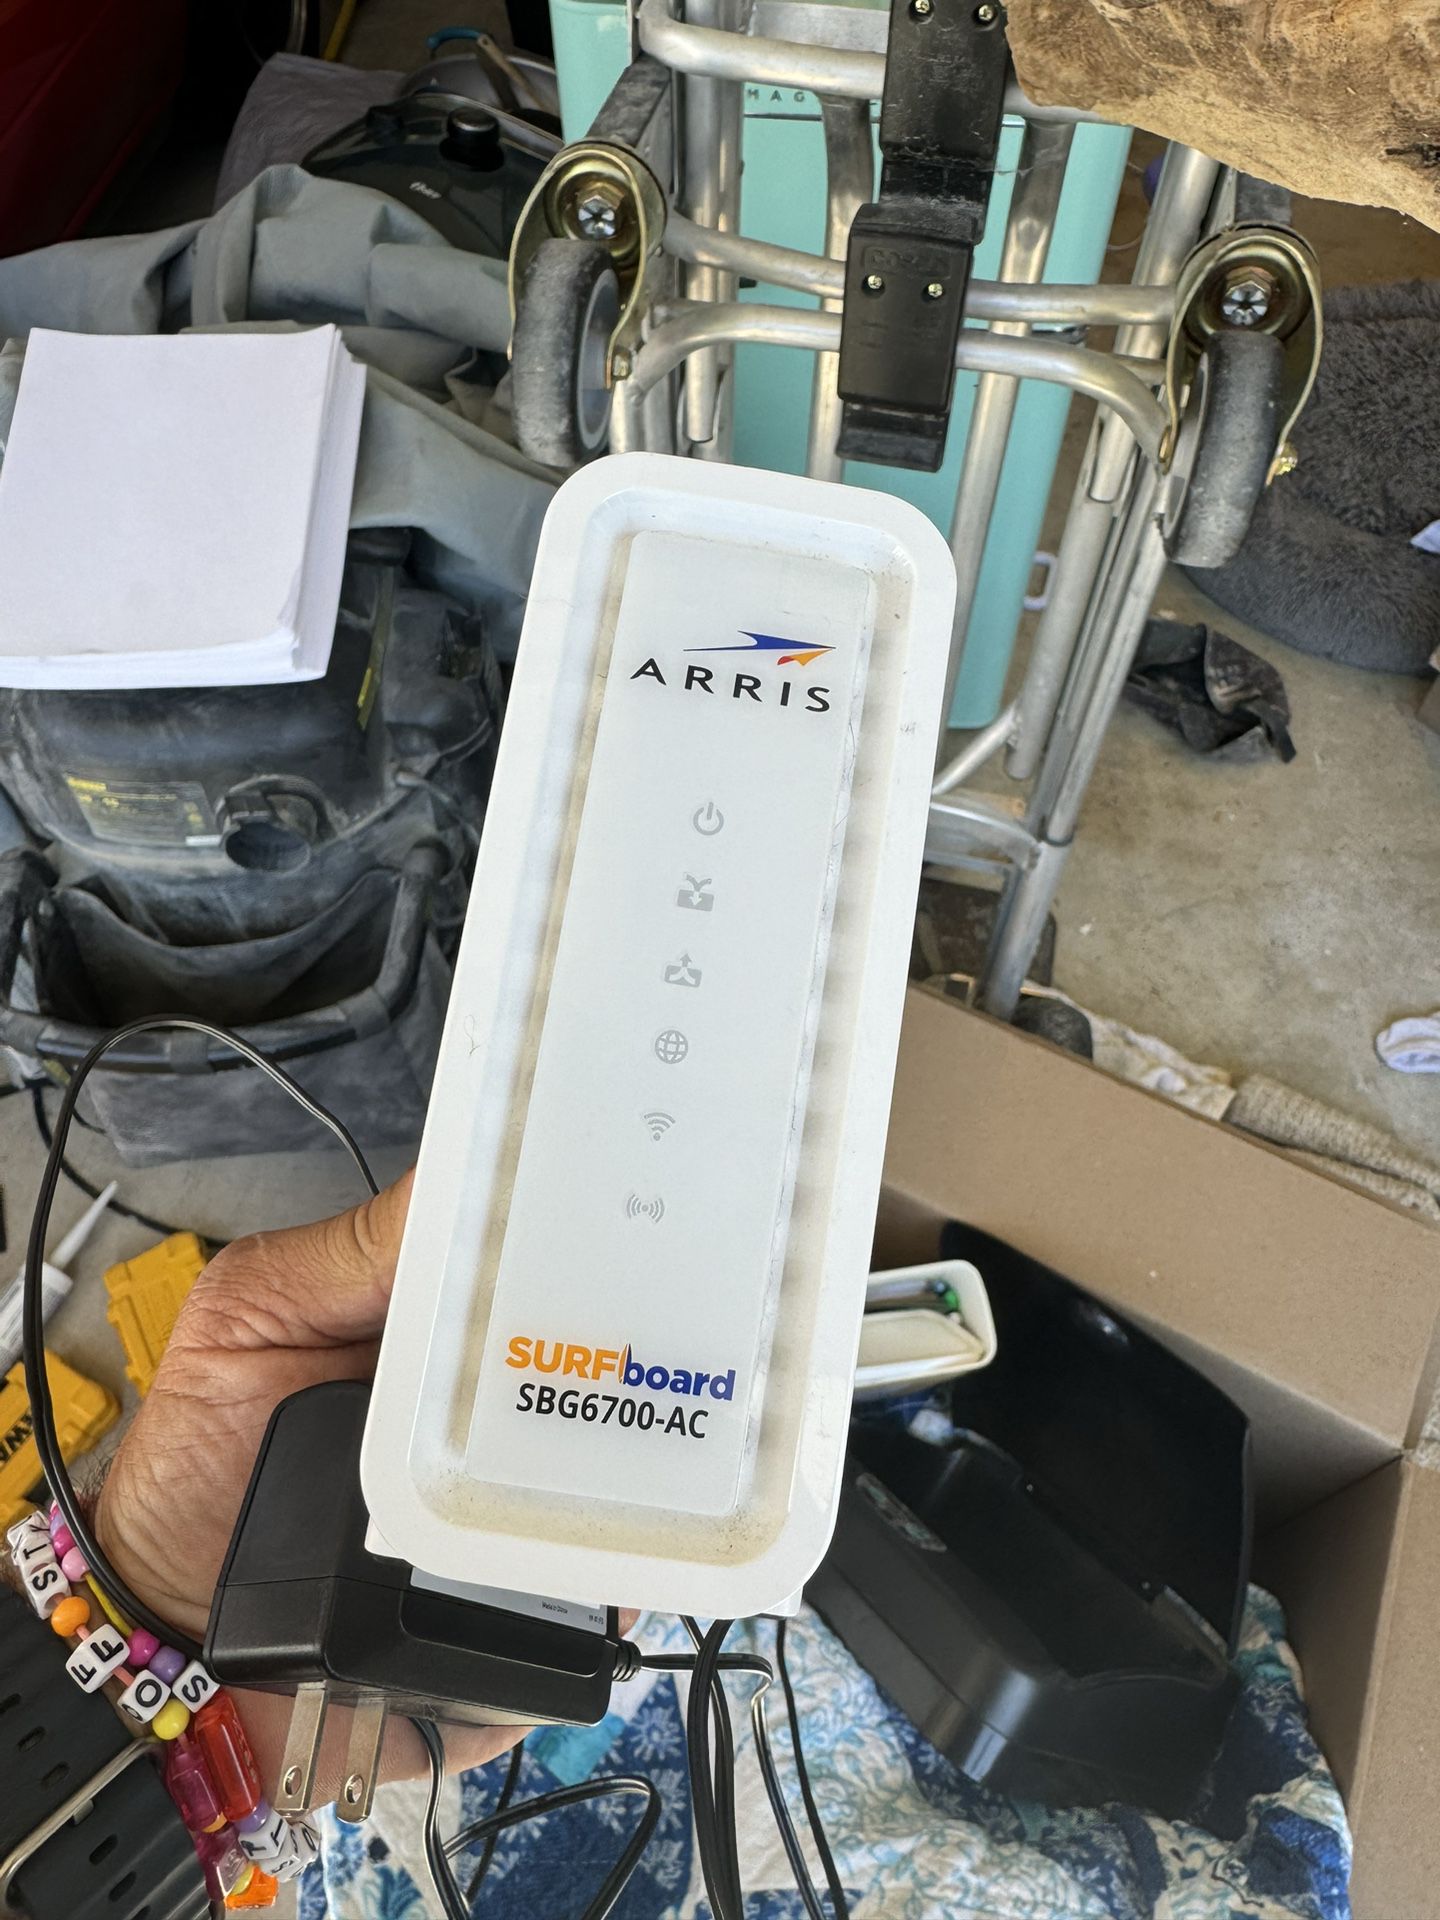 ARRIS Cable Modem SBG6700-AC